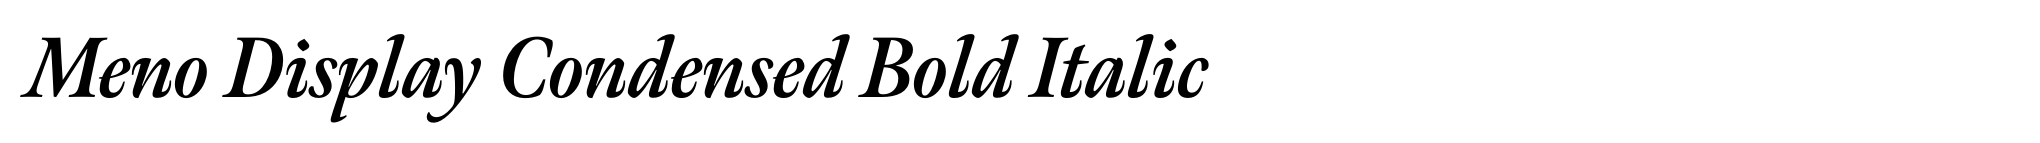 Meno Display Condensed Bold Italic image